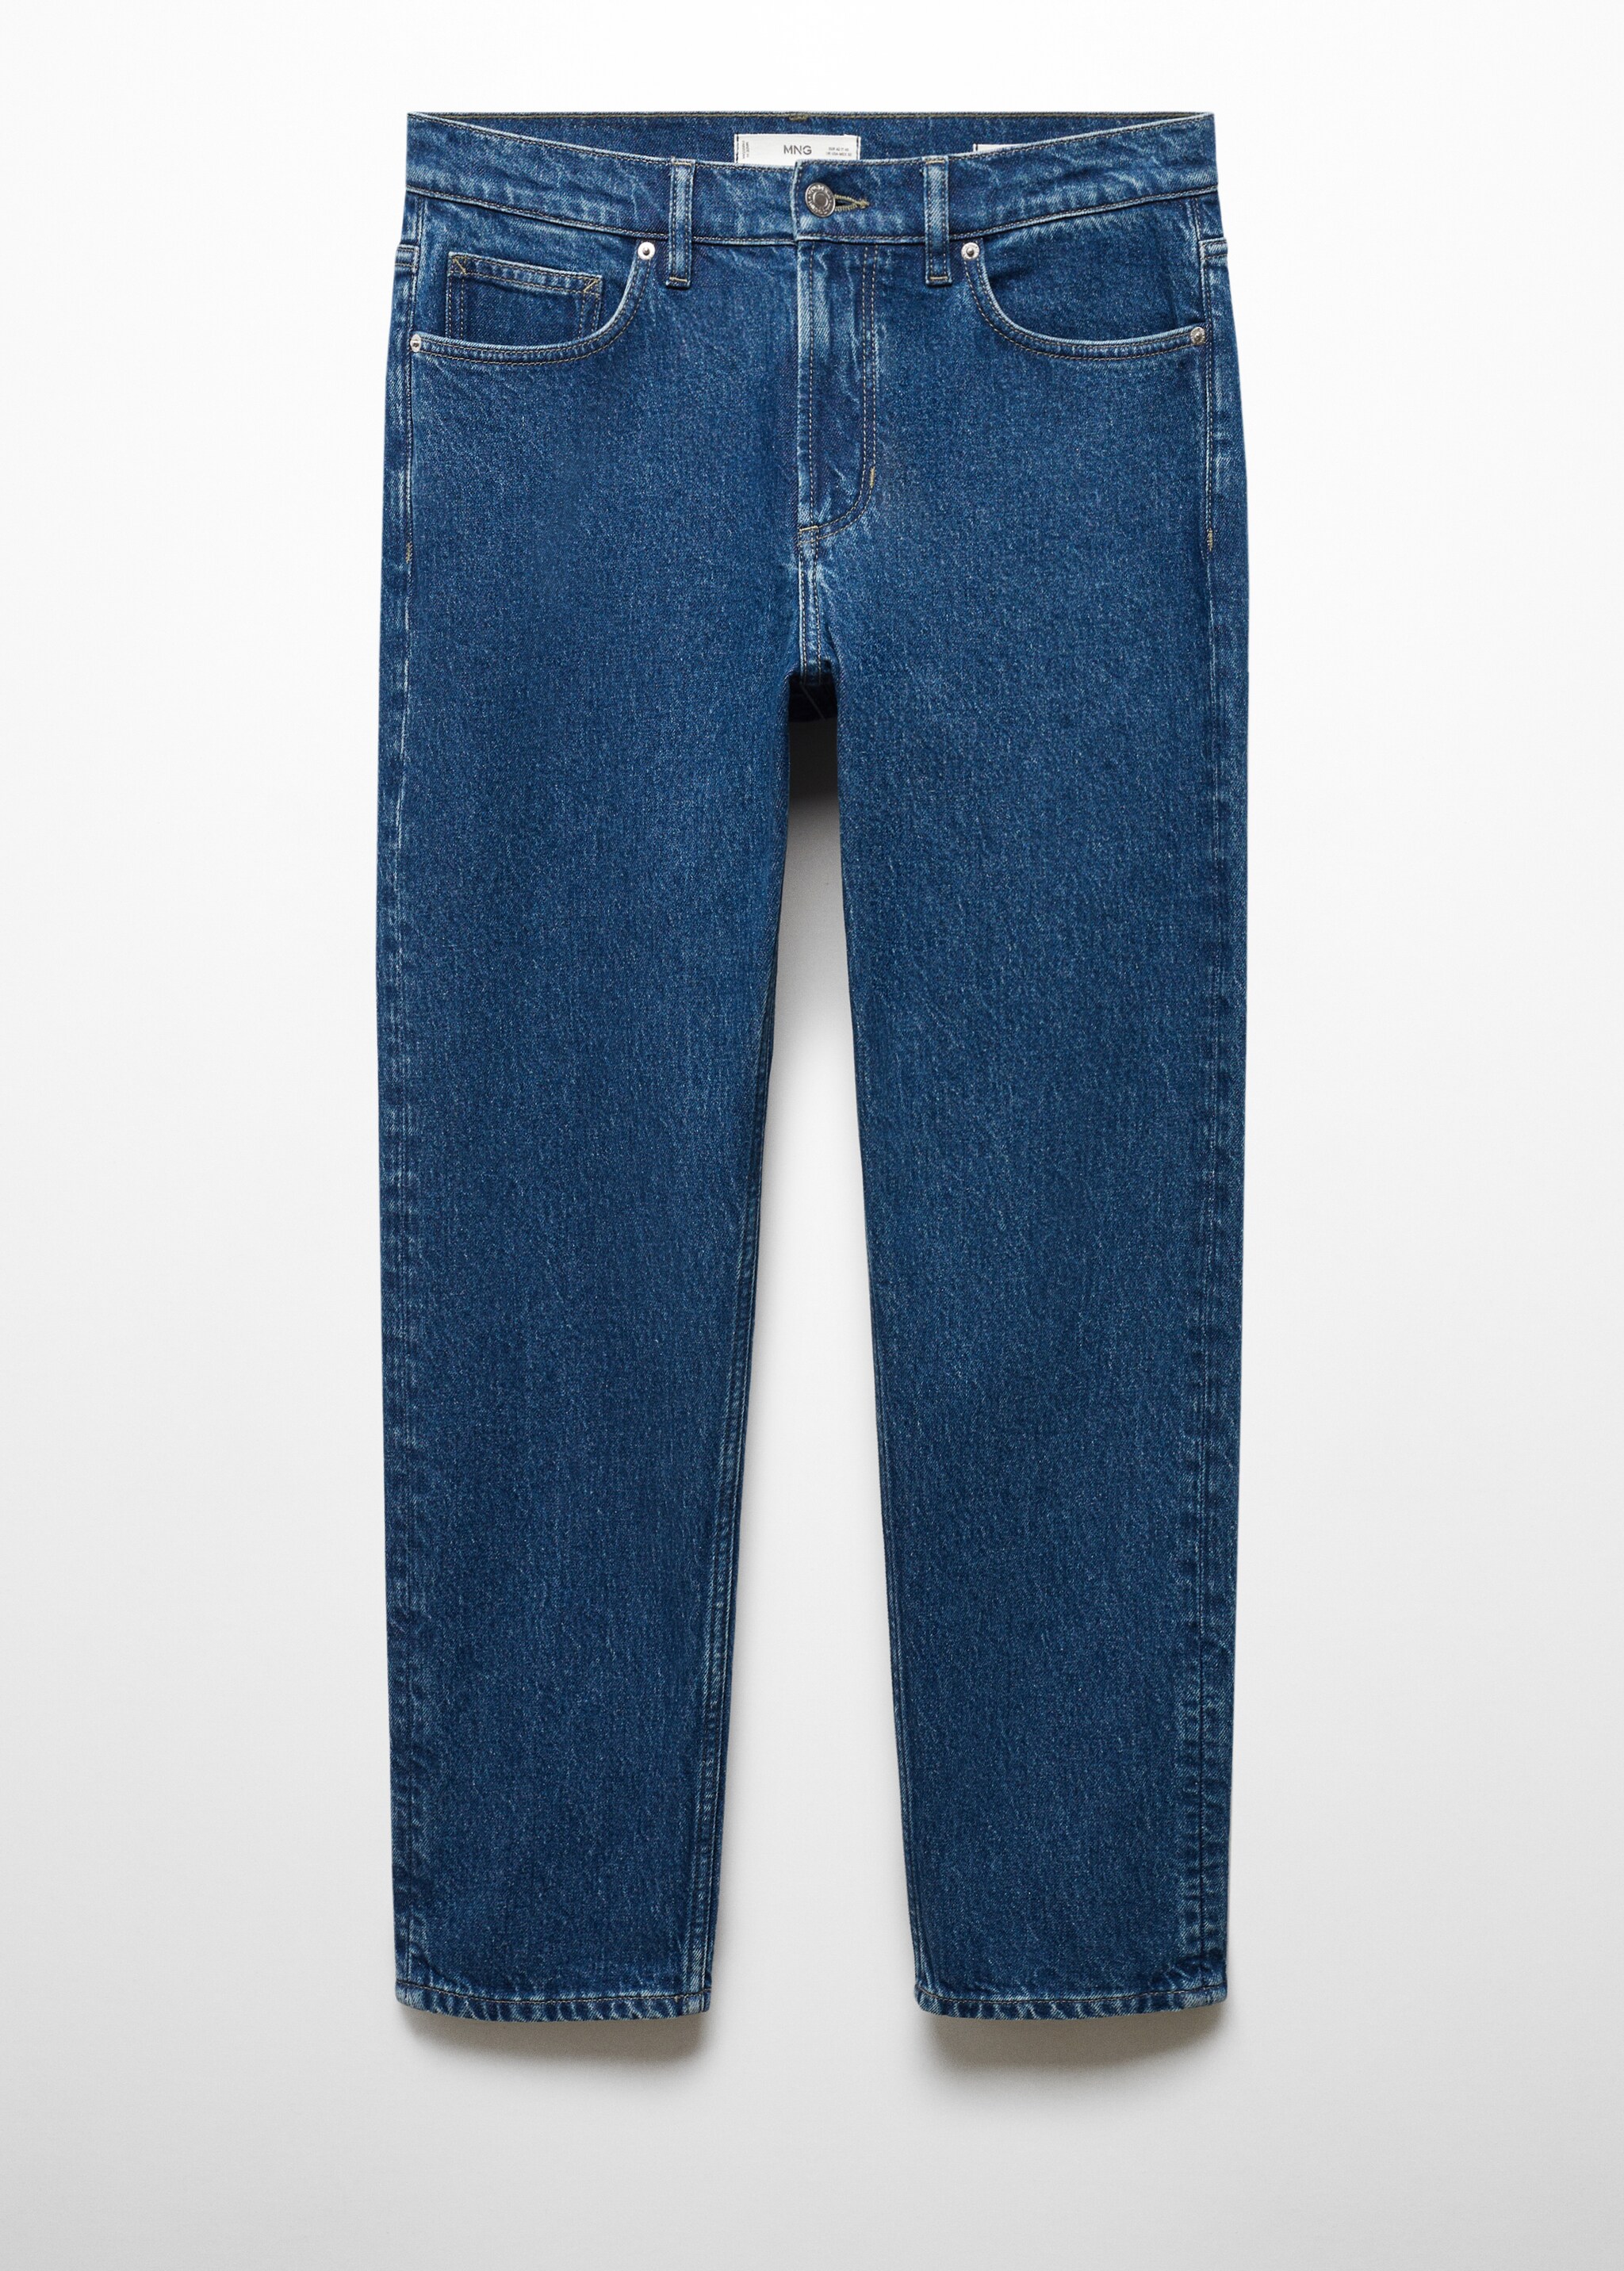 Jeans Ben tappered fit - Artículo sin modelo